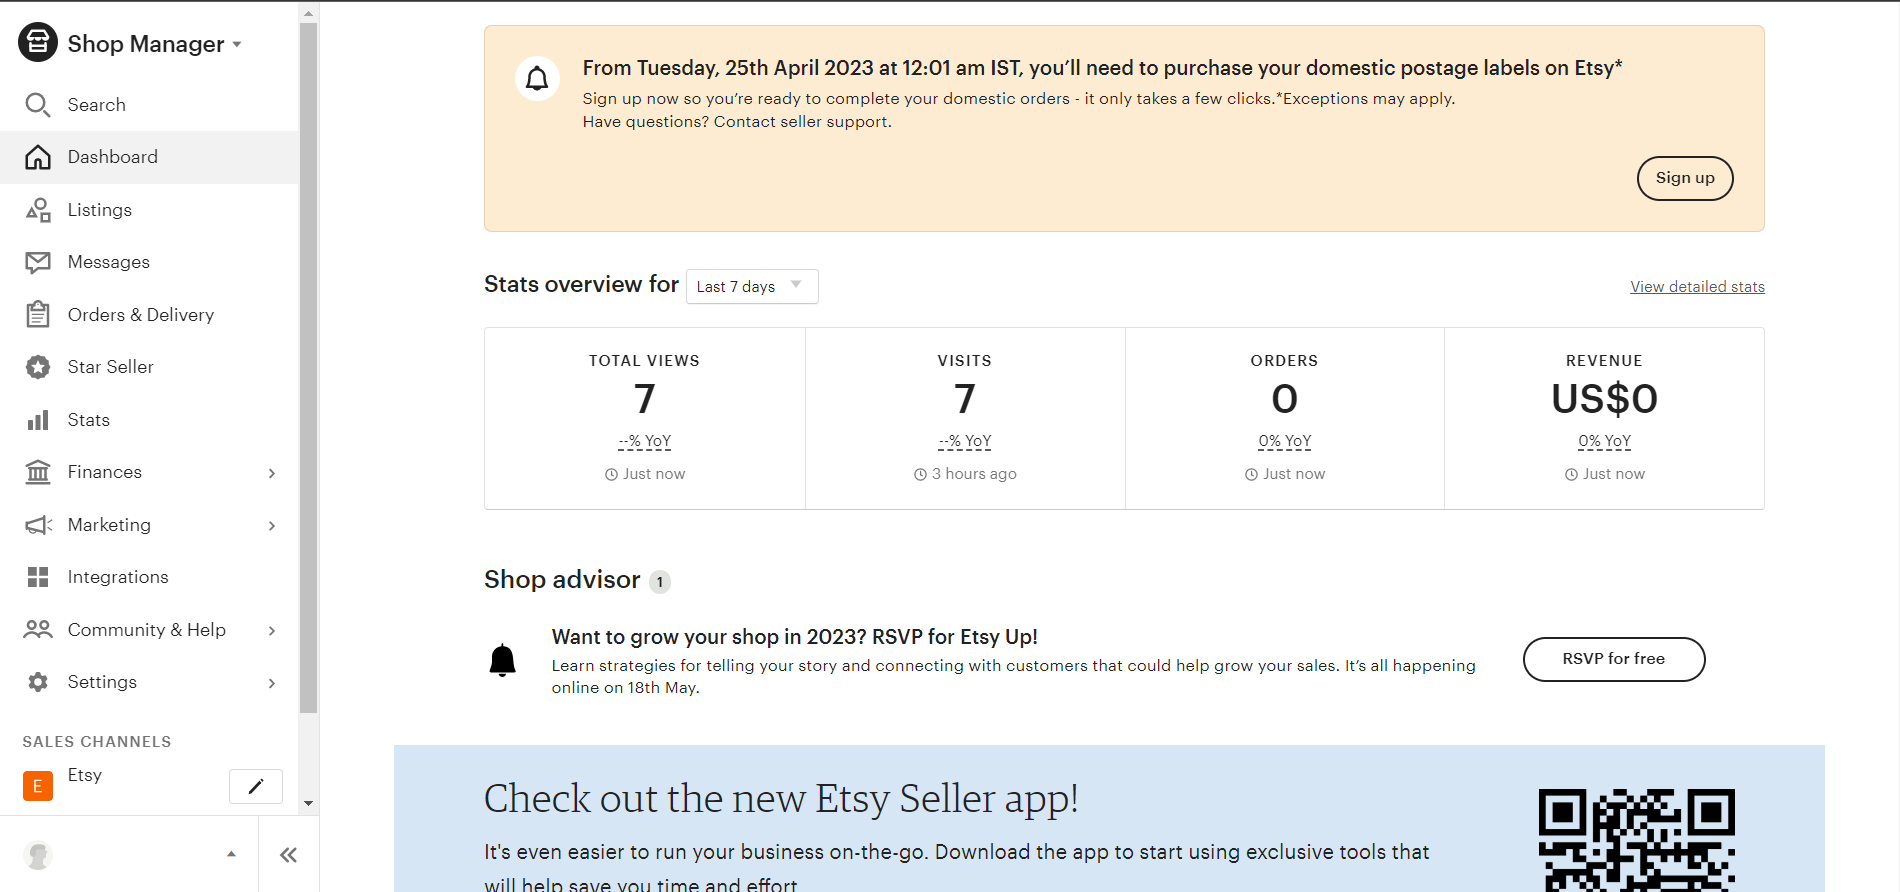 Etsy Seller Account Management Service